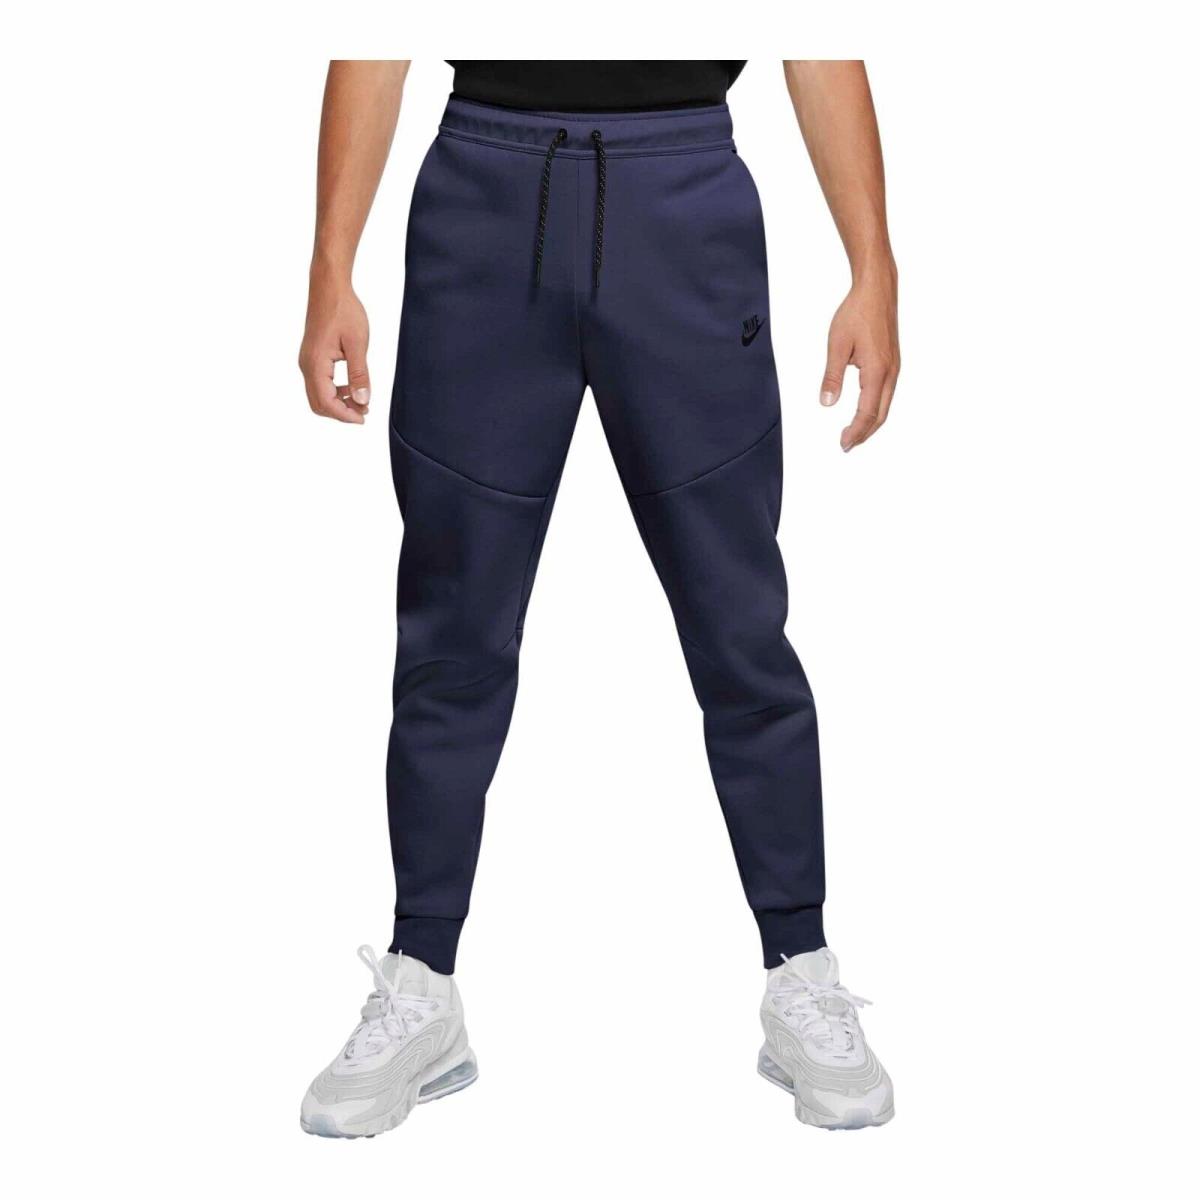 Nike Tech Fleece Pants Mens Joggers Sweatpants Navy Blue CU4495-410 Tapered XL - Royal Blue